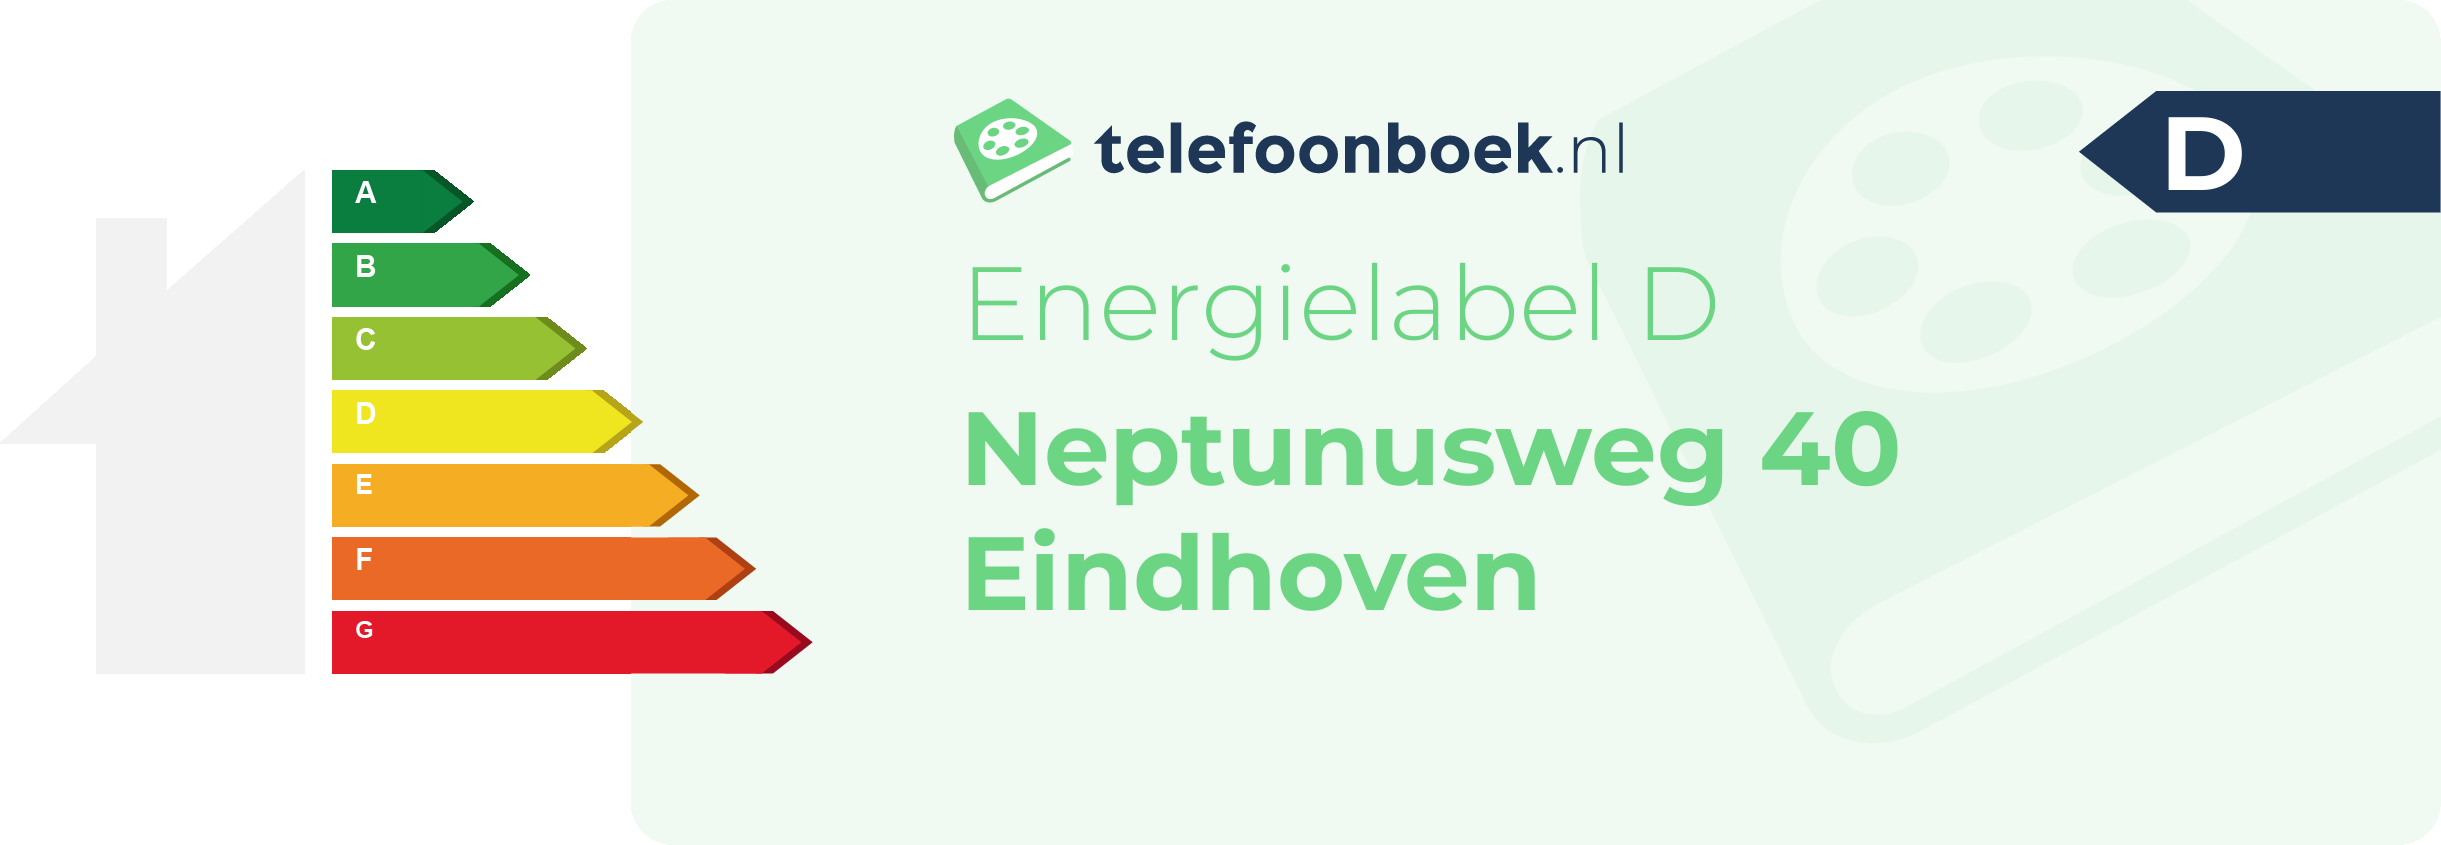 Energielabel Neptunusweg 40 Eindhoven